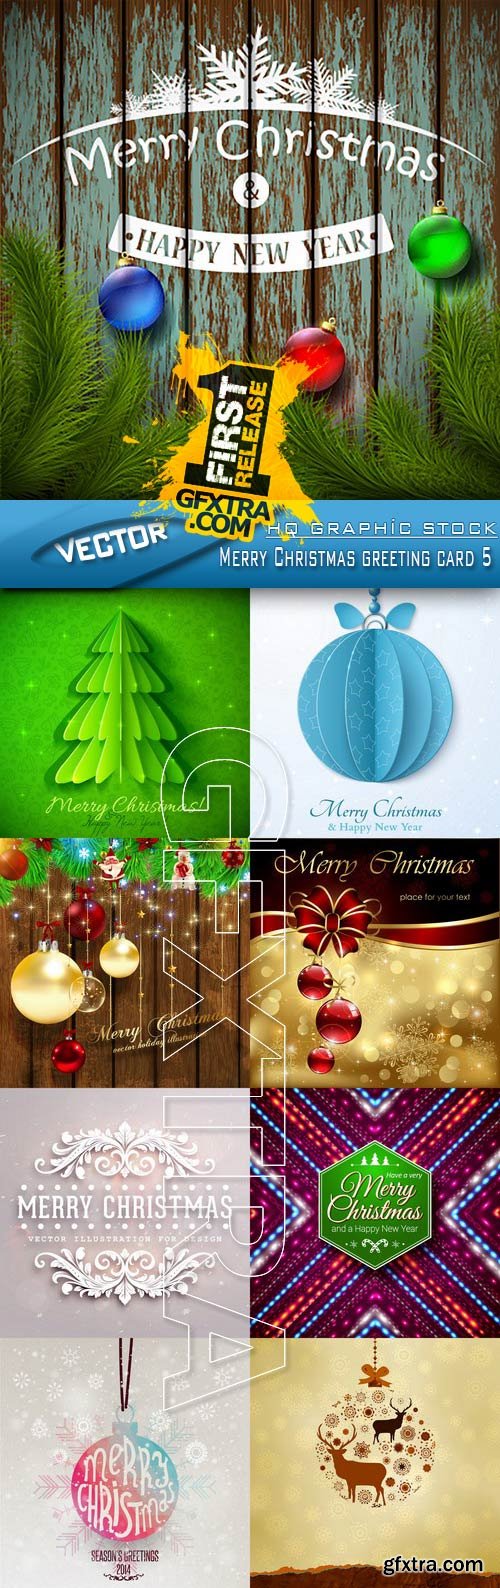 Stock Vector - Merry Christmas greeting card 5